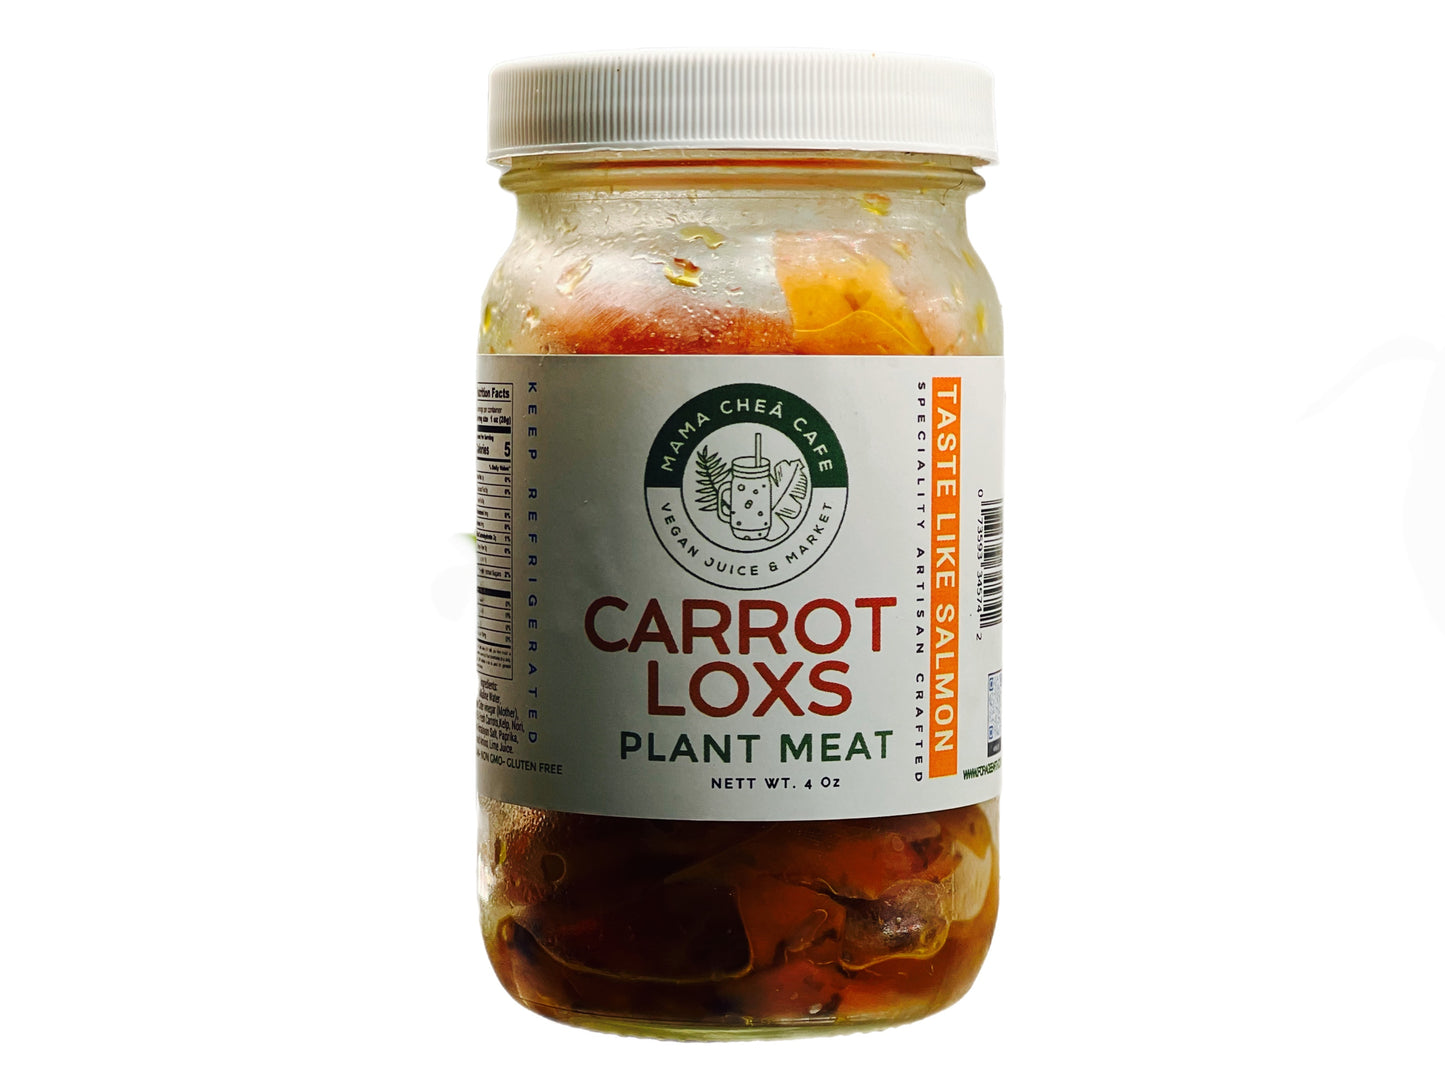 Plant Based Carrot Salmon Lox